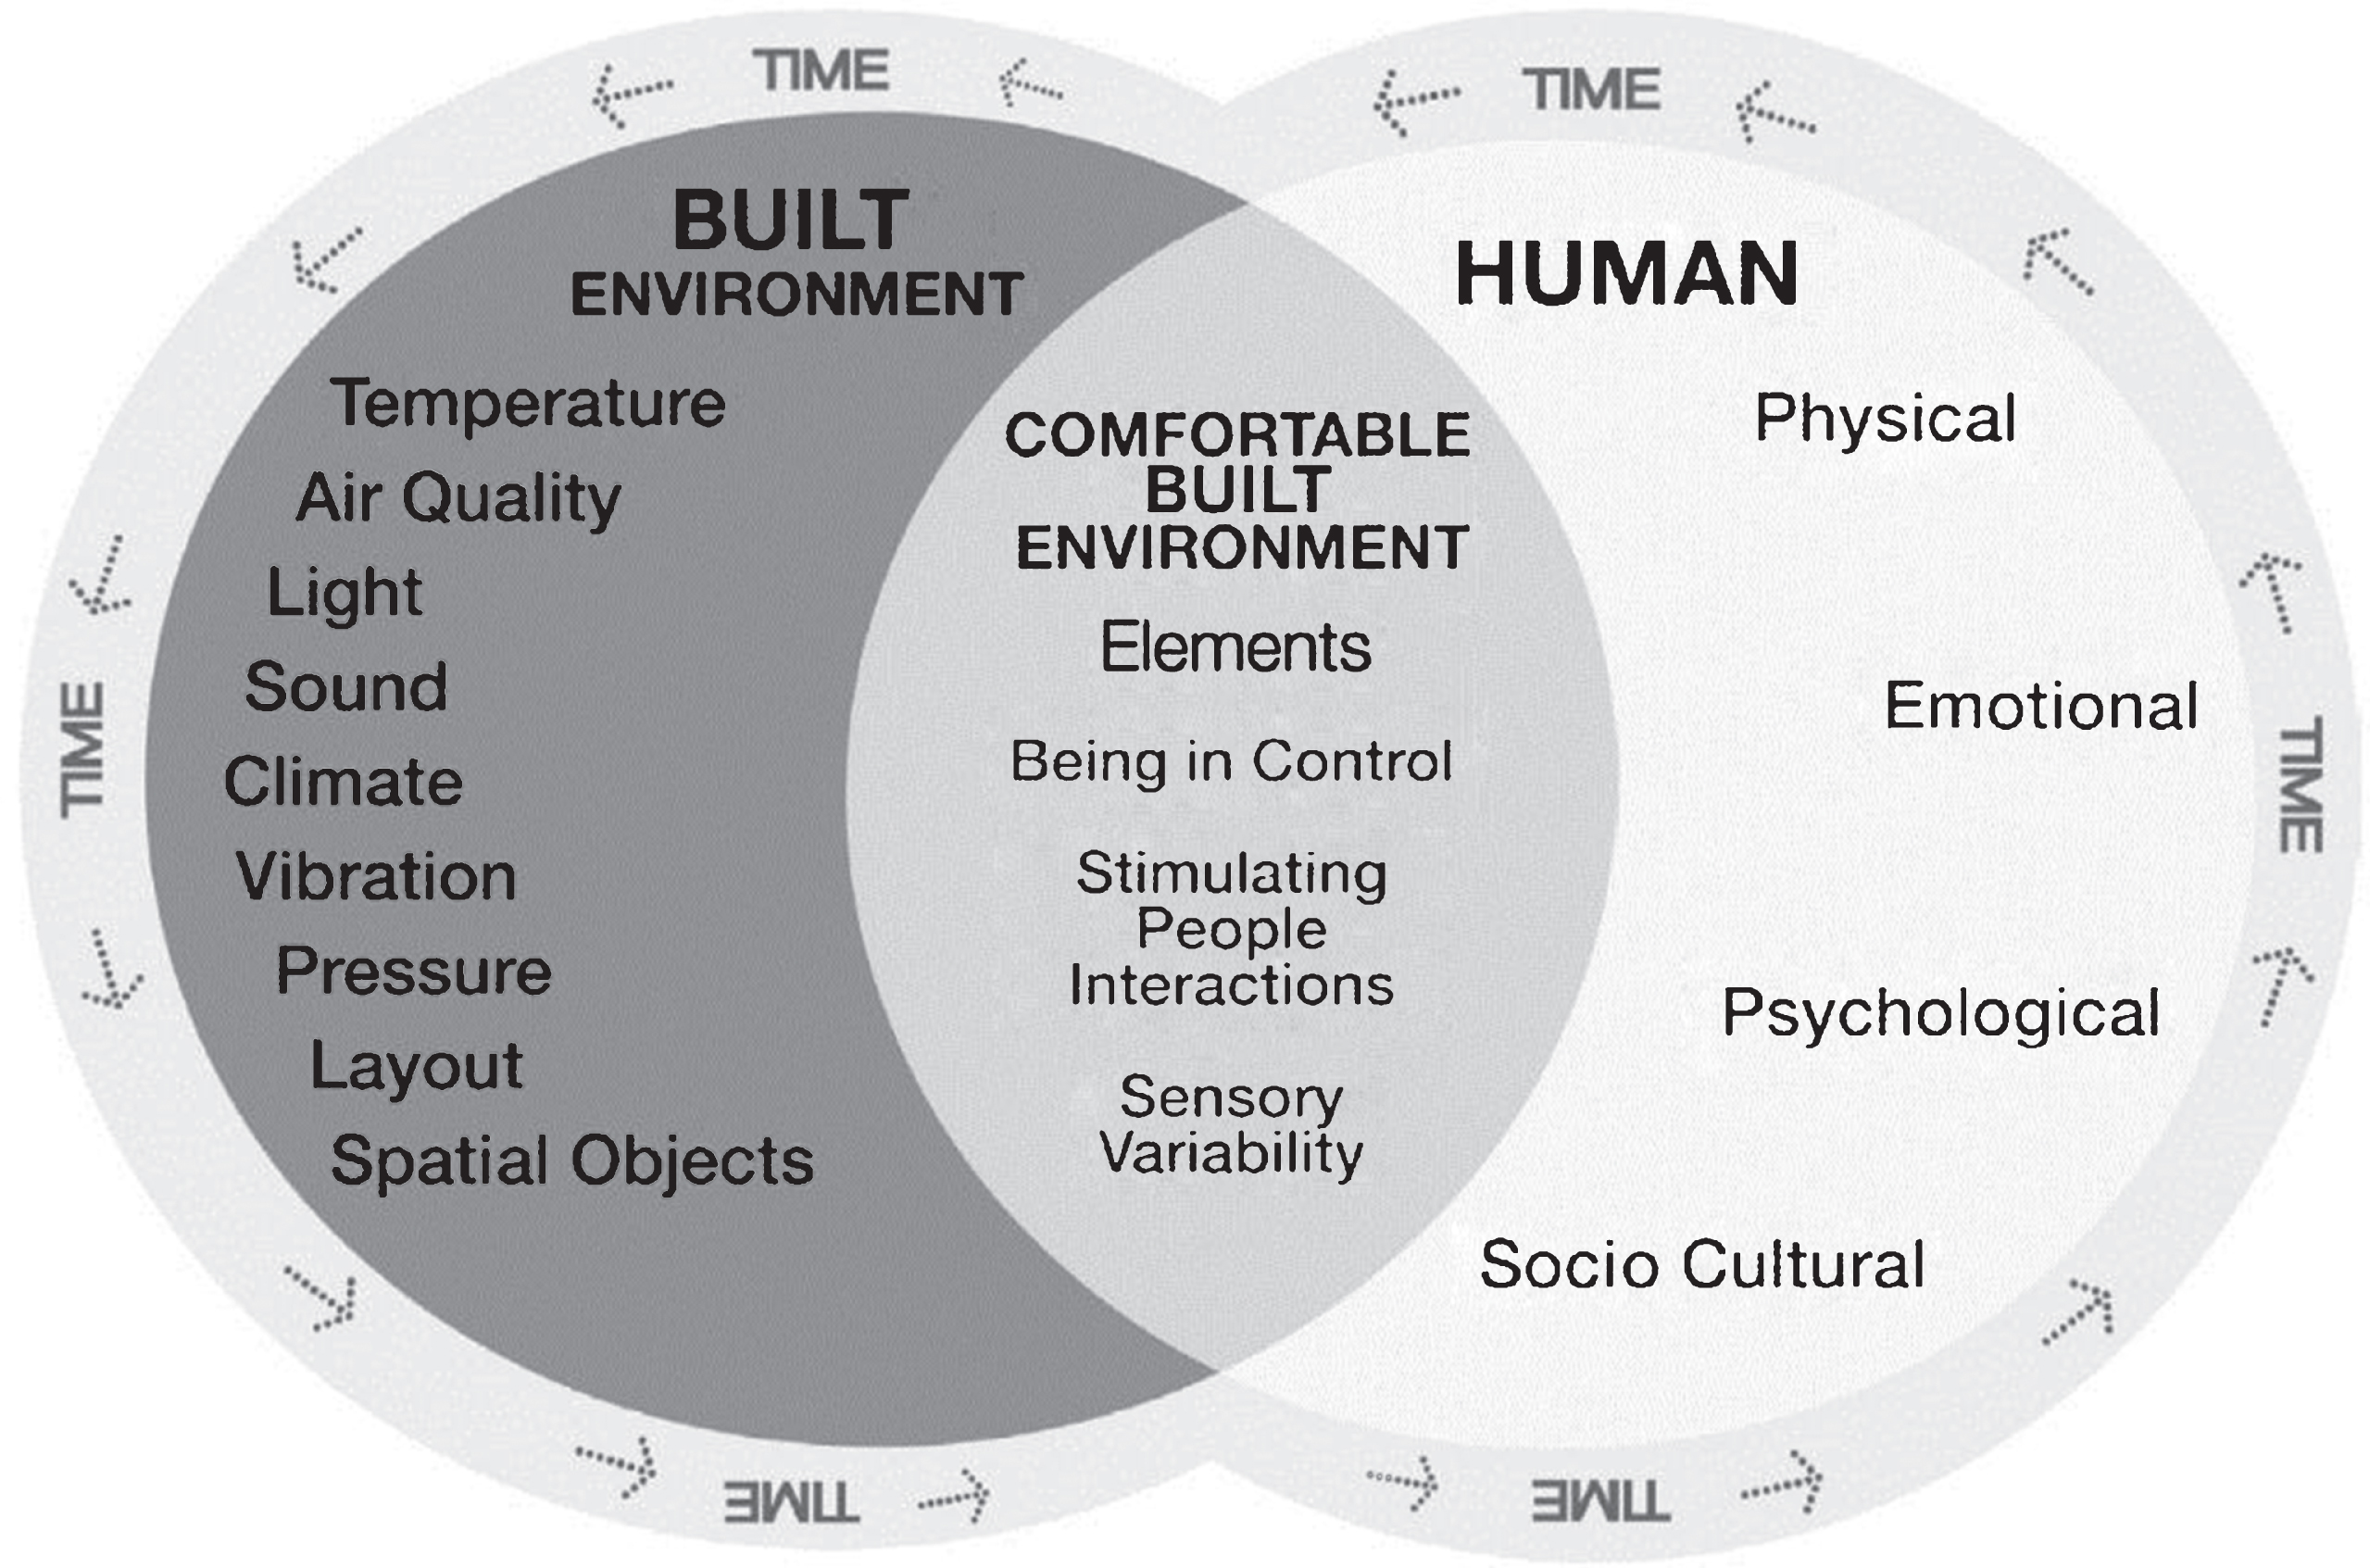 The Comfortable Built Interior Environment Model [32].